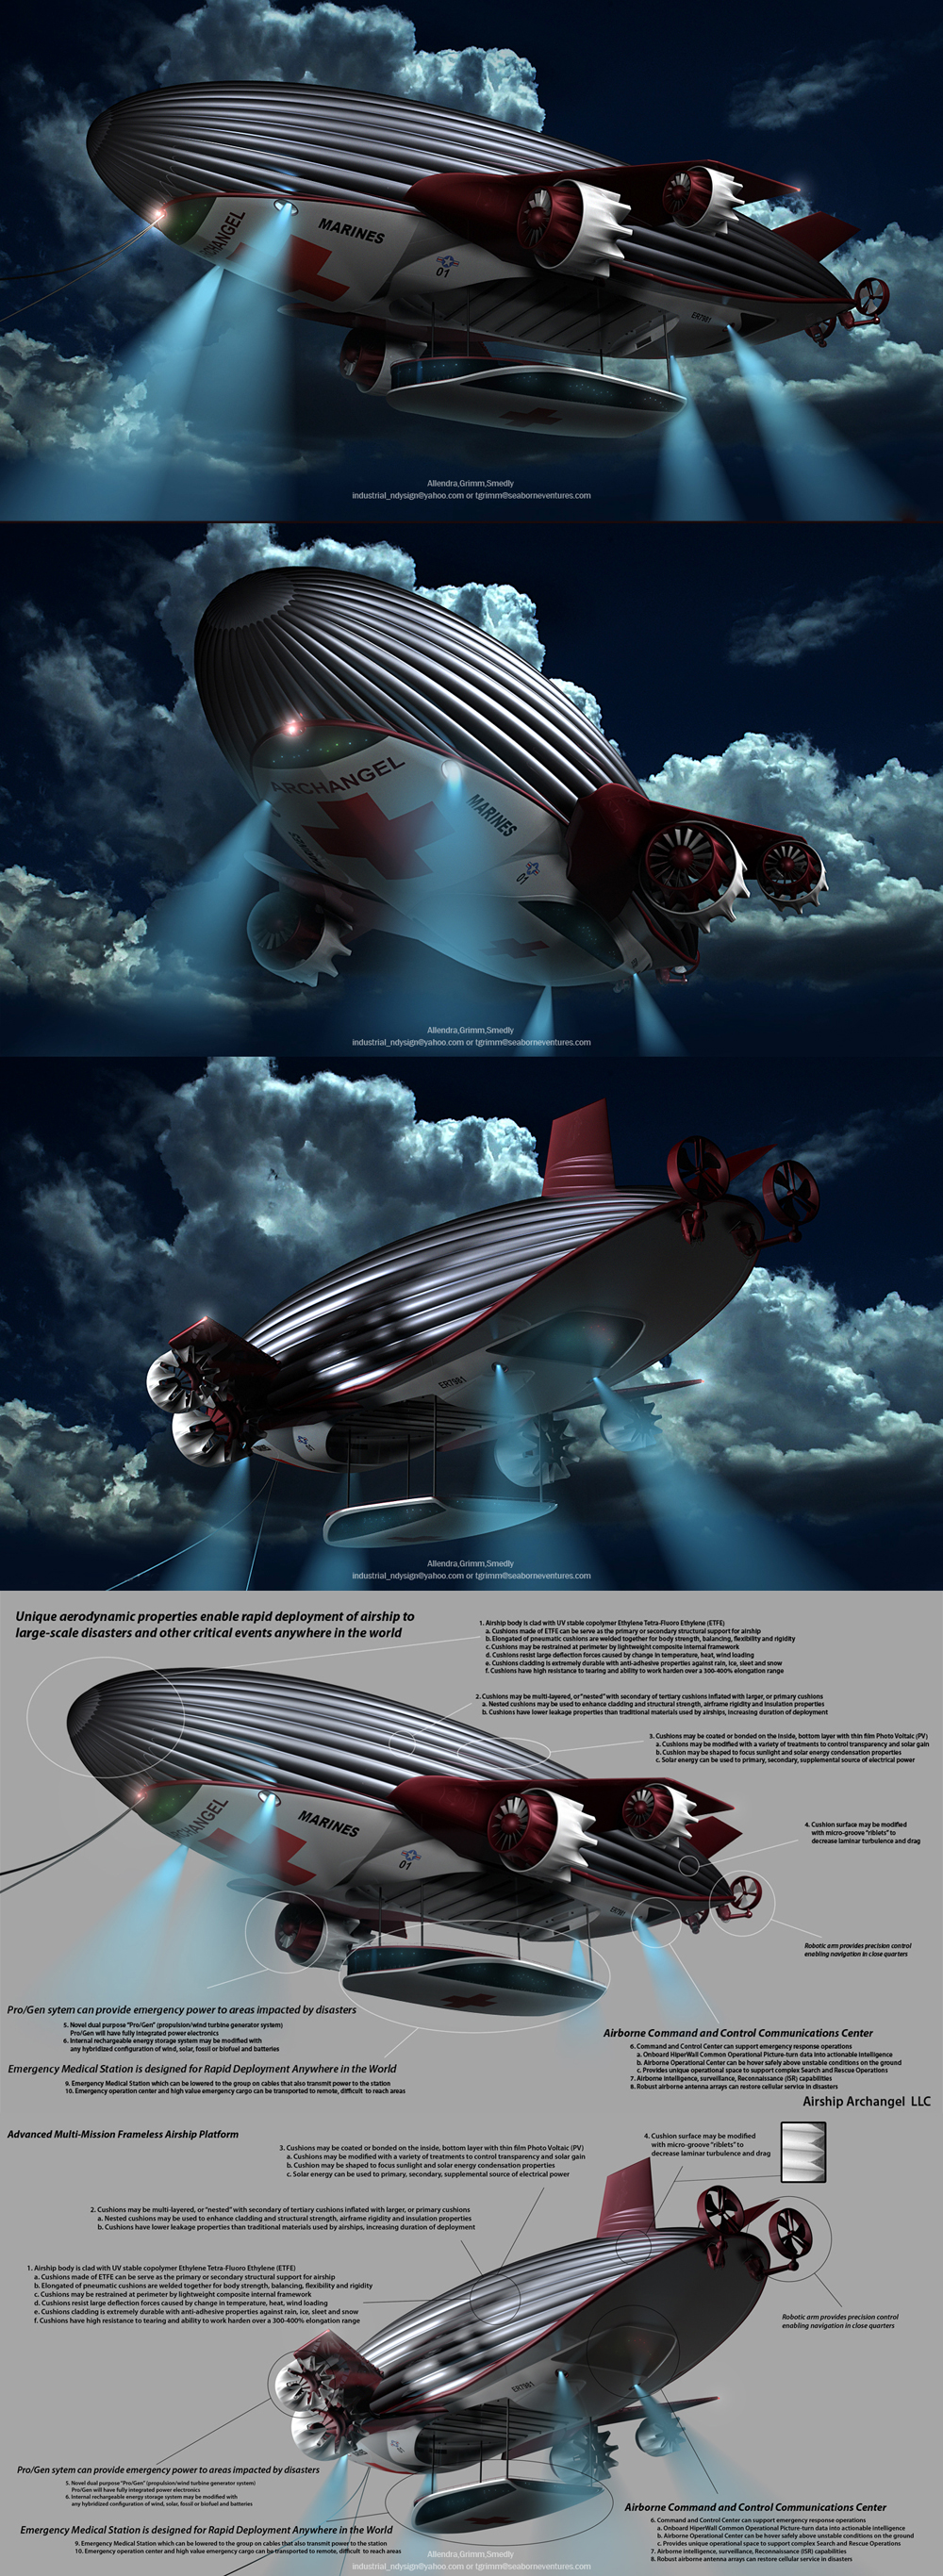 airship energy future cruising air aviation luxury